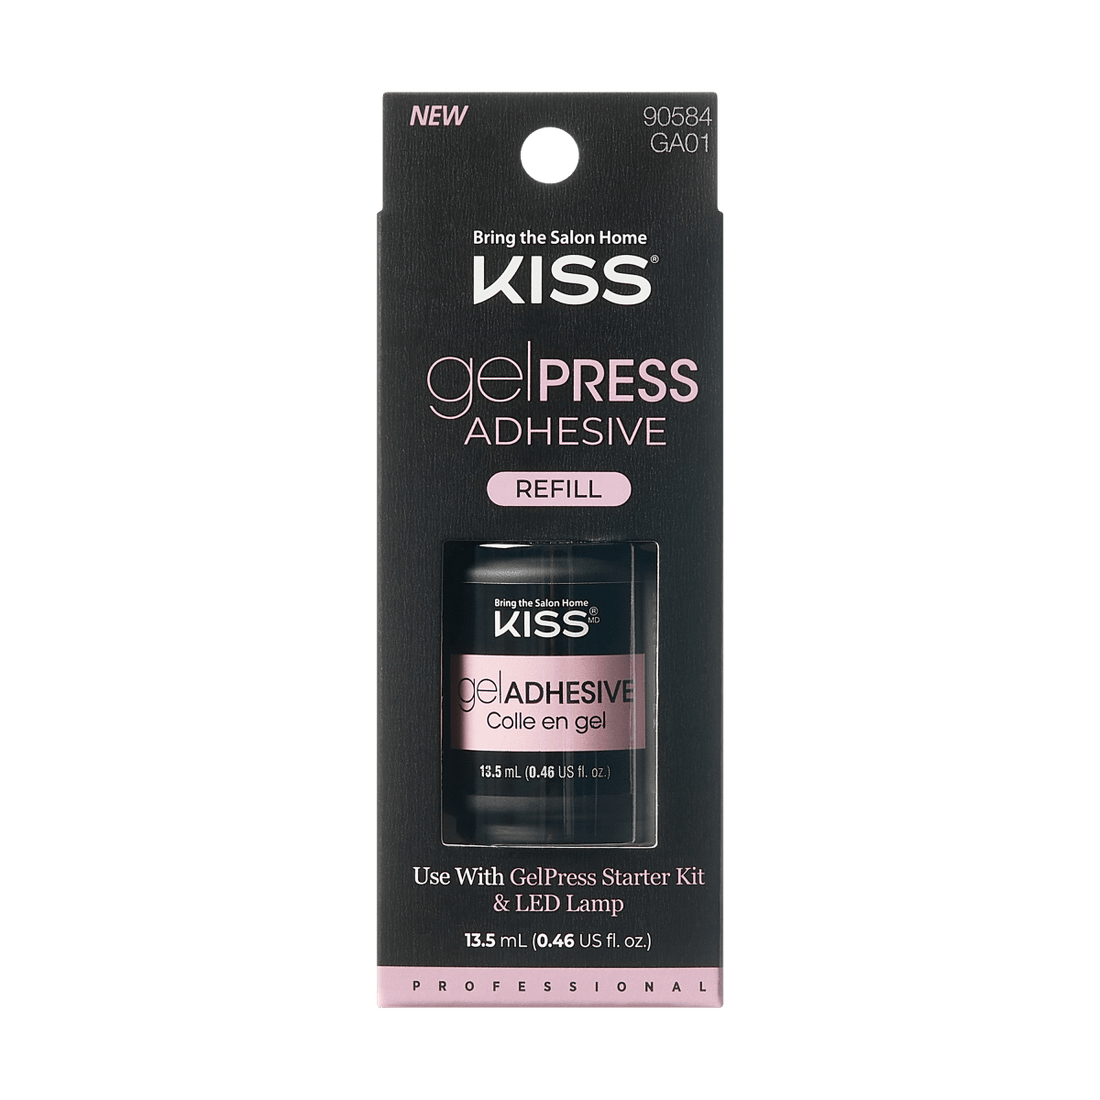 KISS gelPRESS - Adhesive Refill